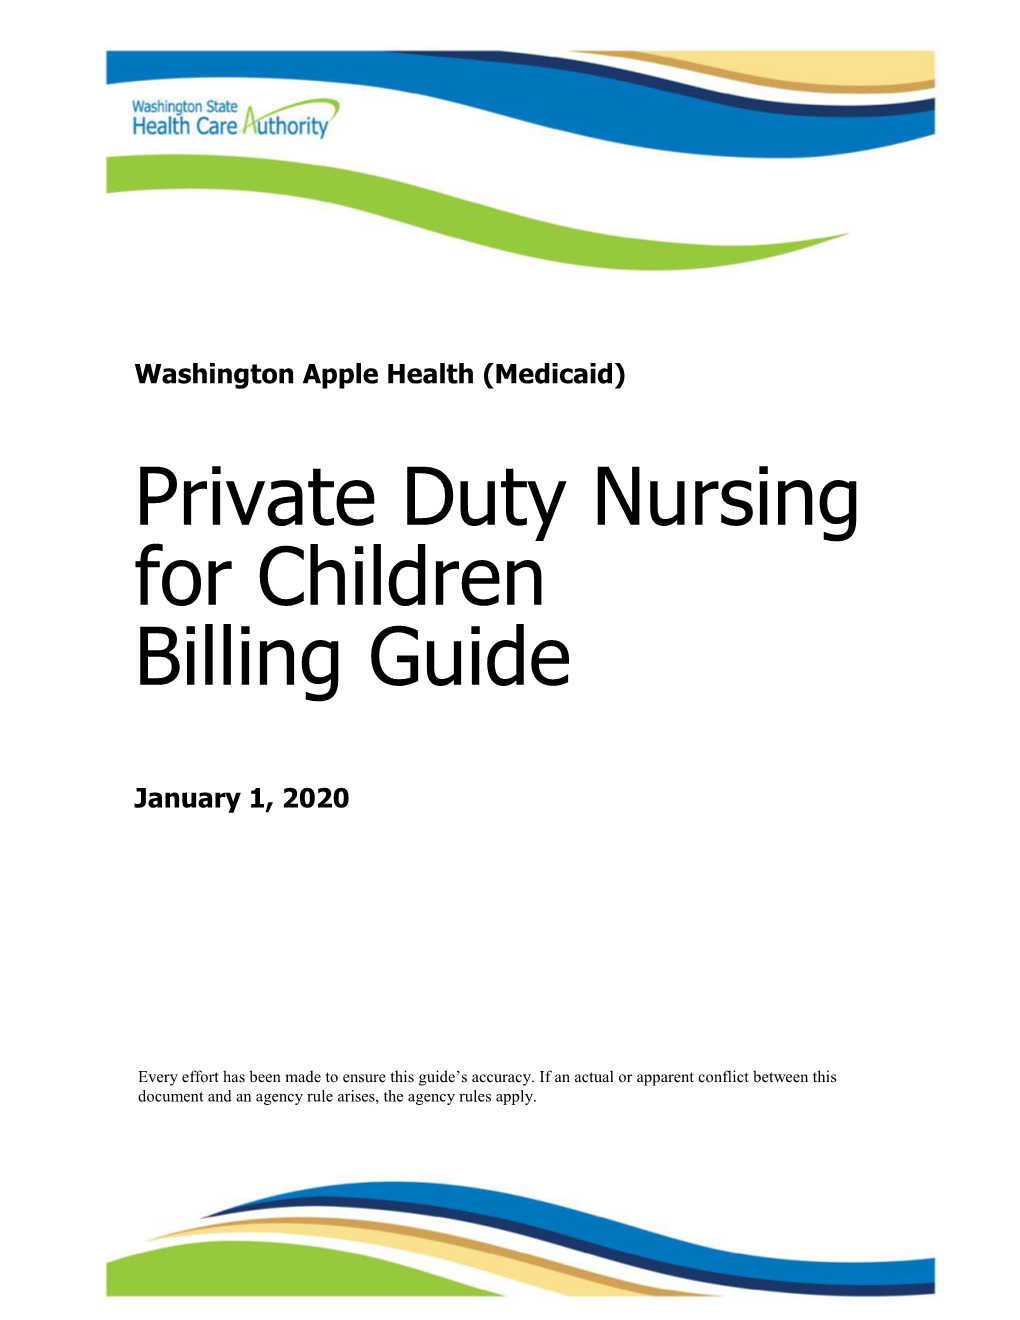 Private Duty Nursing for Children Billing Guide